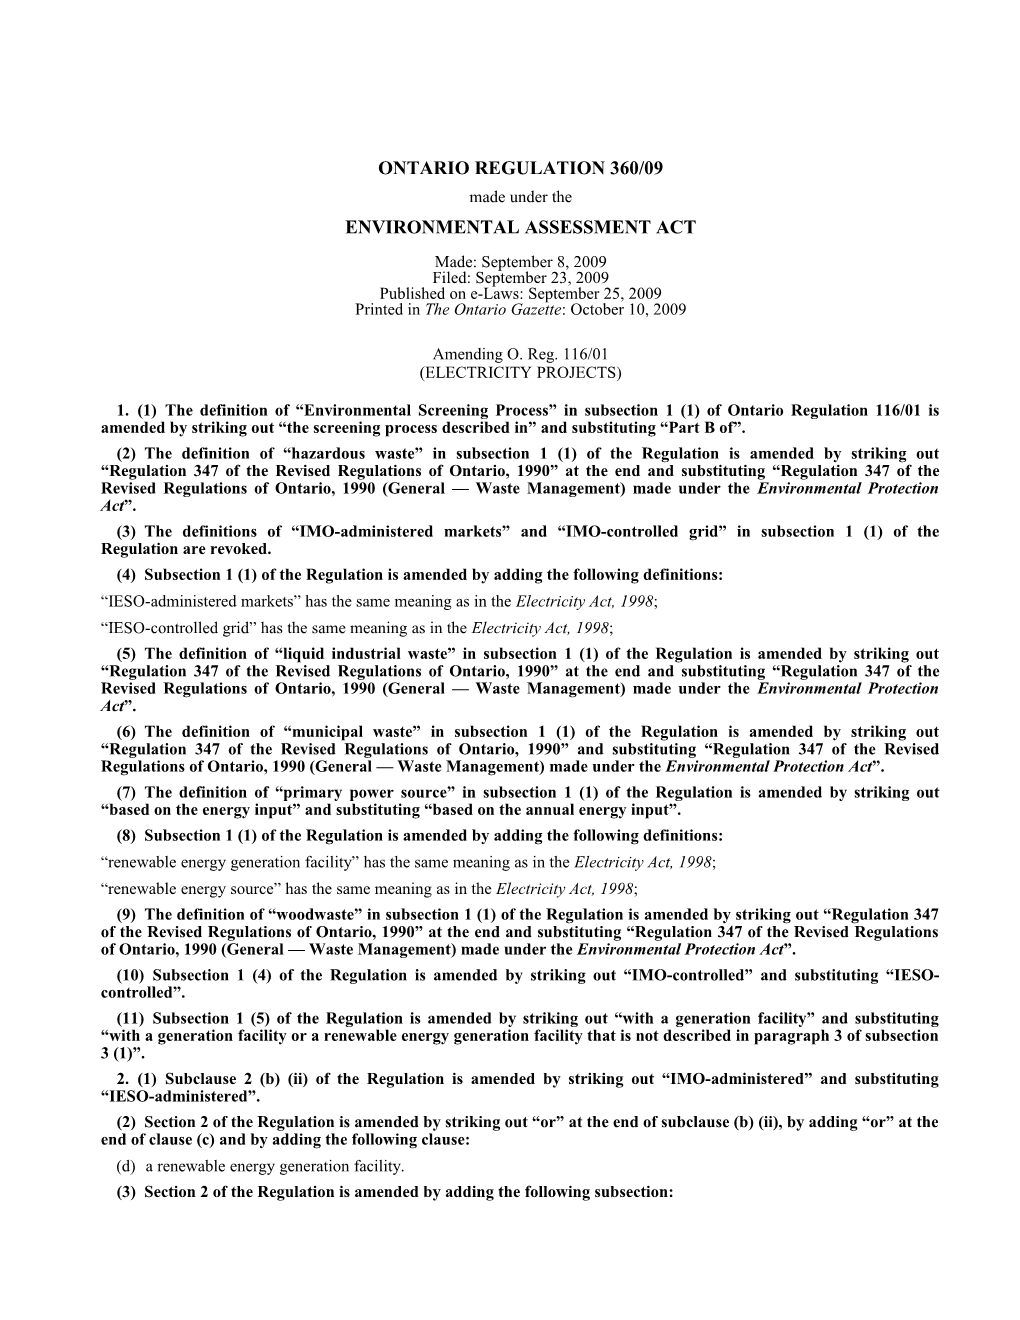 ENVIRONMENTAL ASSESSMENT ACT - O. Reg. 360/09